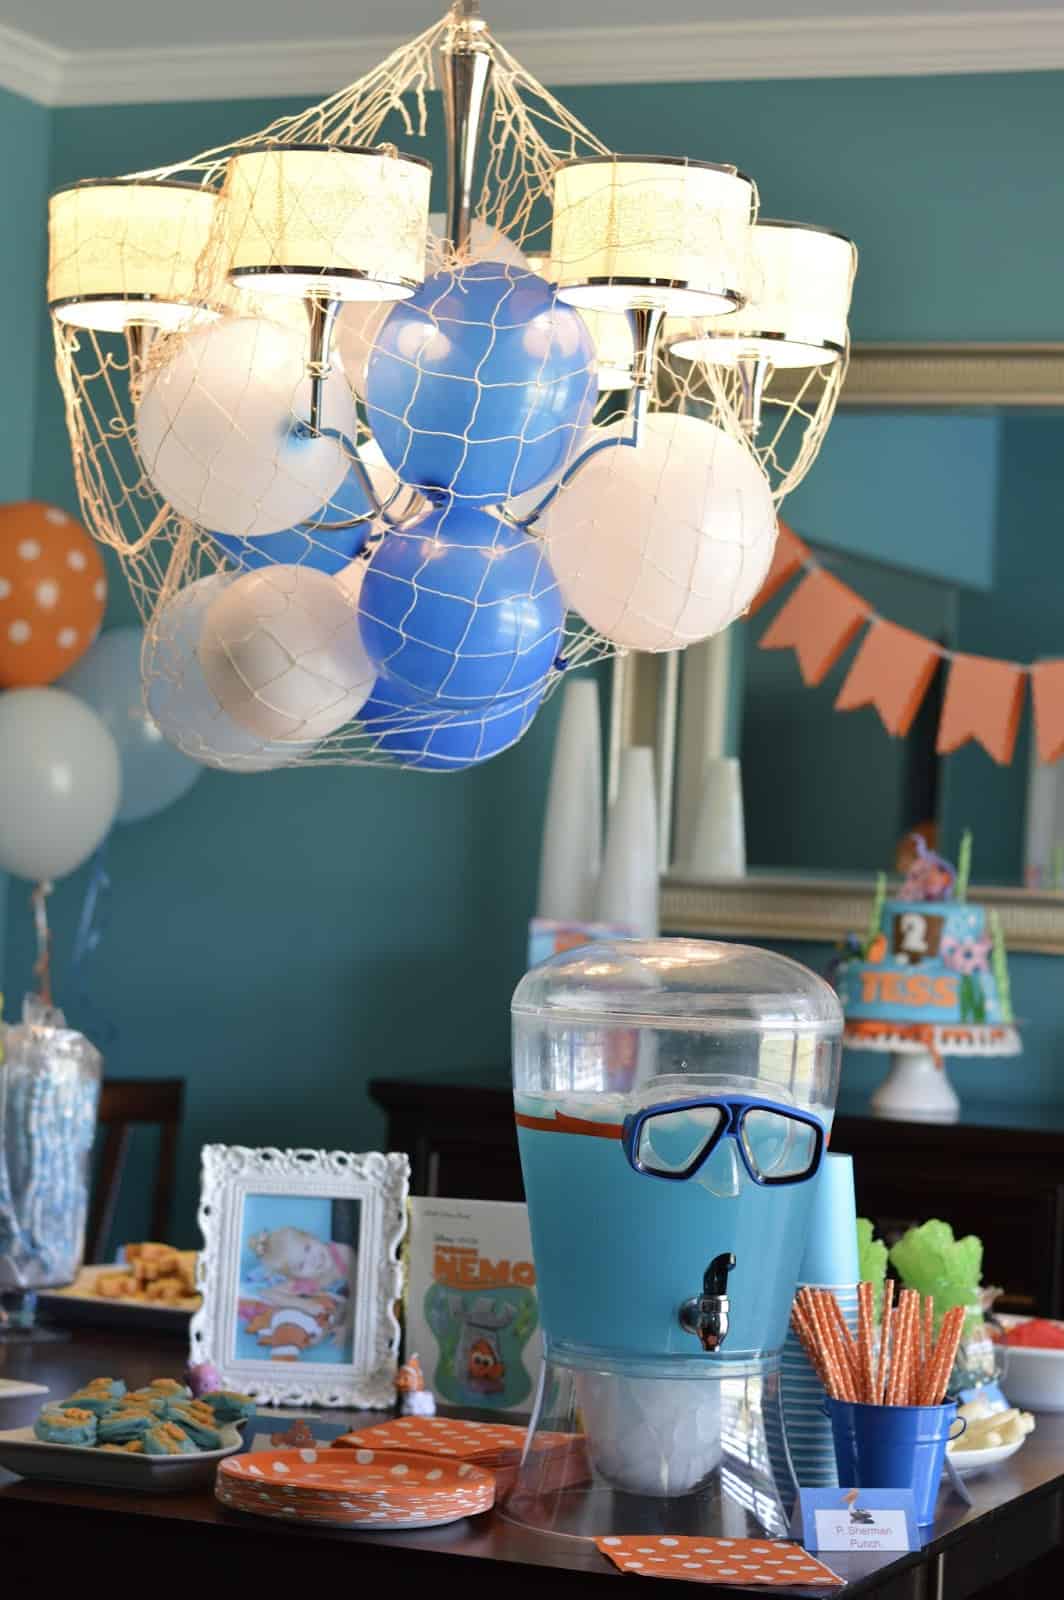 https://www.journeyofparenthood.com/wp-content/uploads/2016/09/Finding-Nemo-Birthday-Party-Ideas-Food-Decor-More.jpg